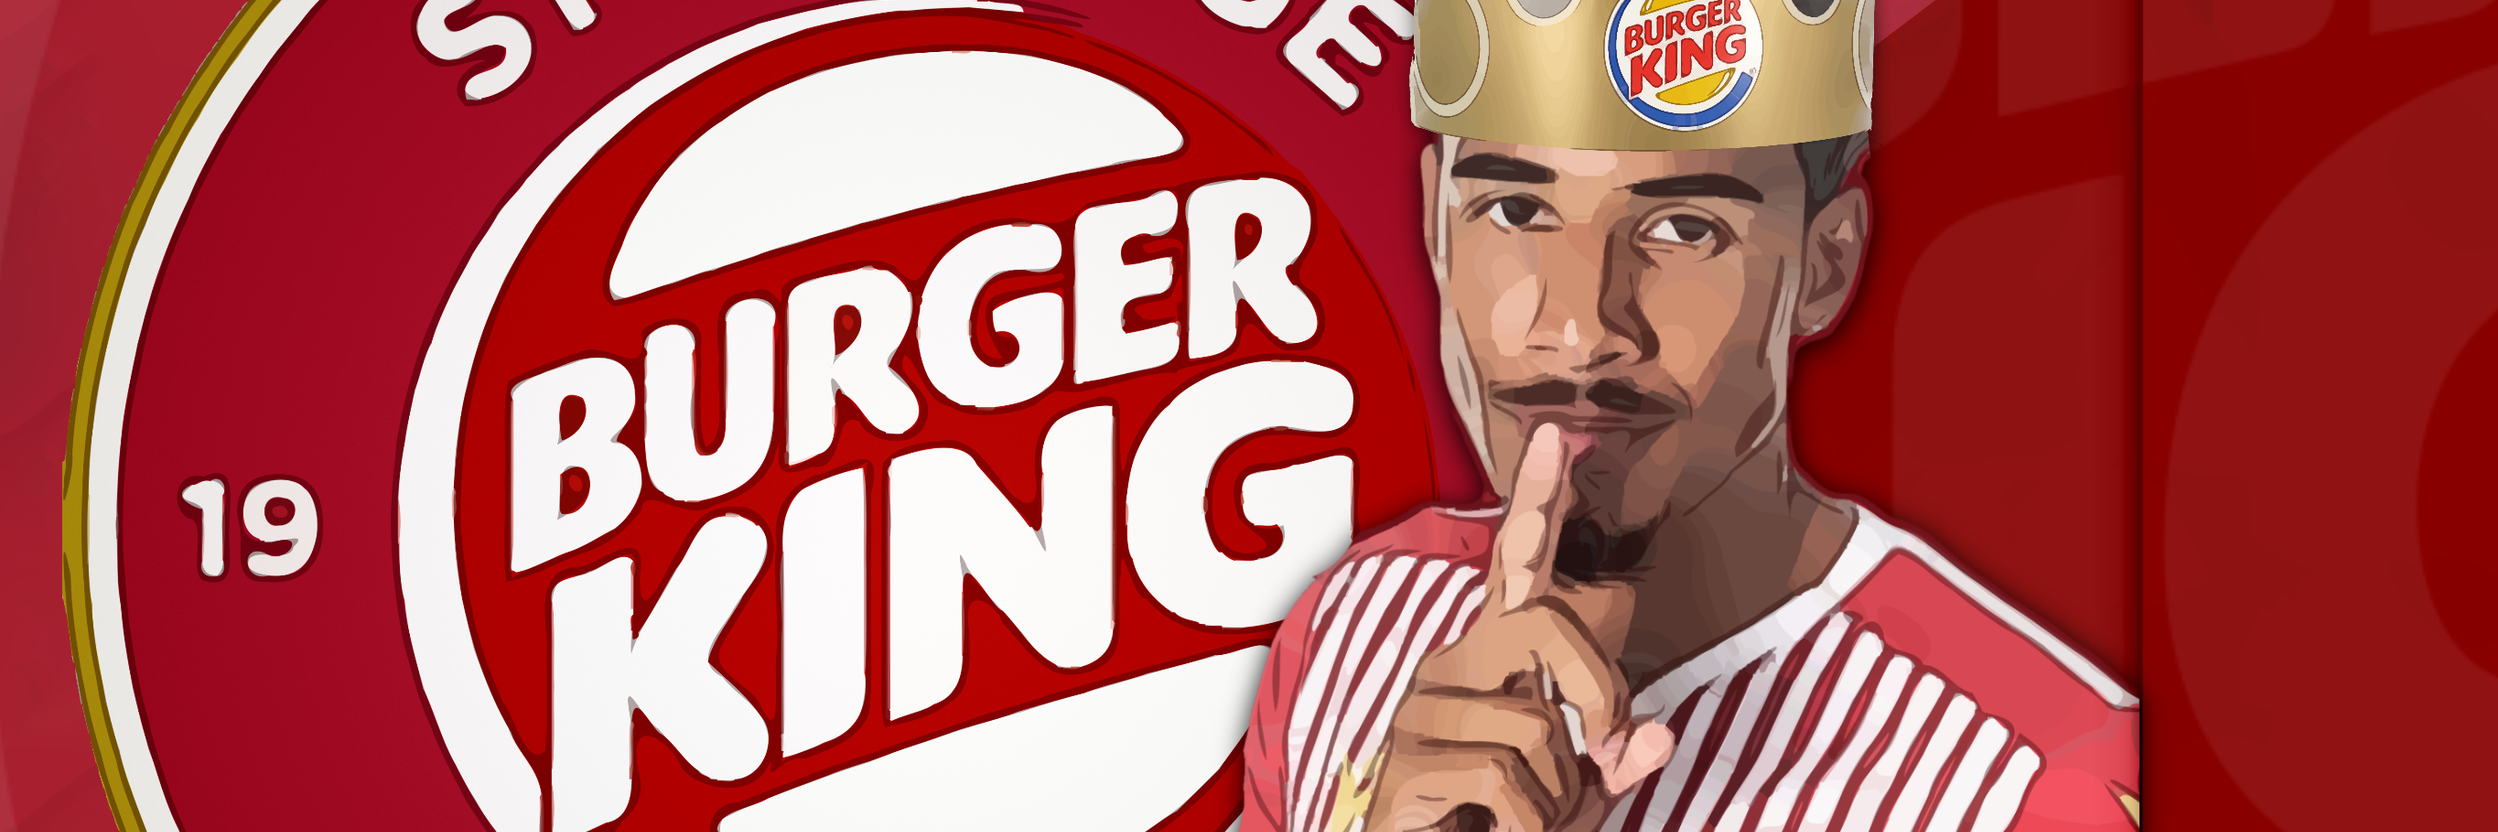 Fifa 20 Burger King Kit